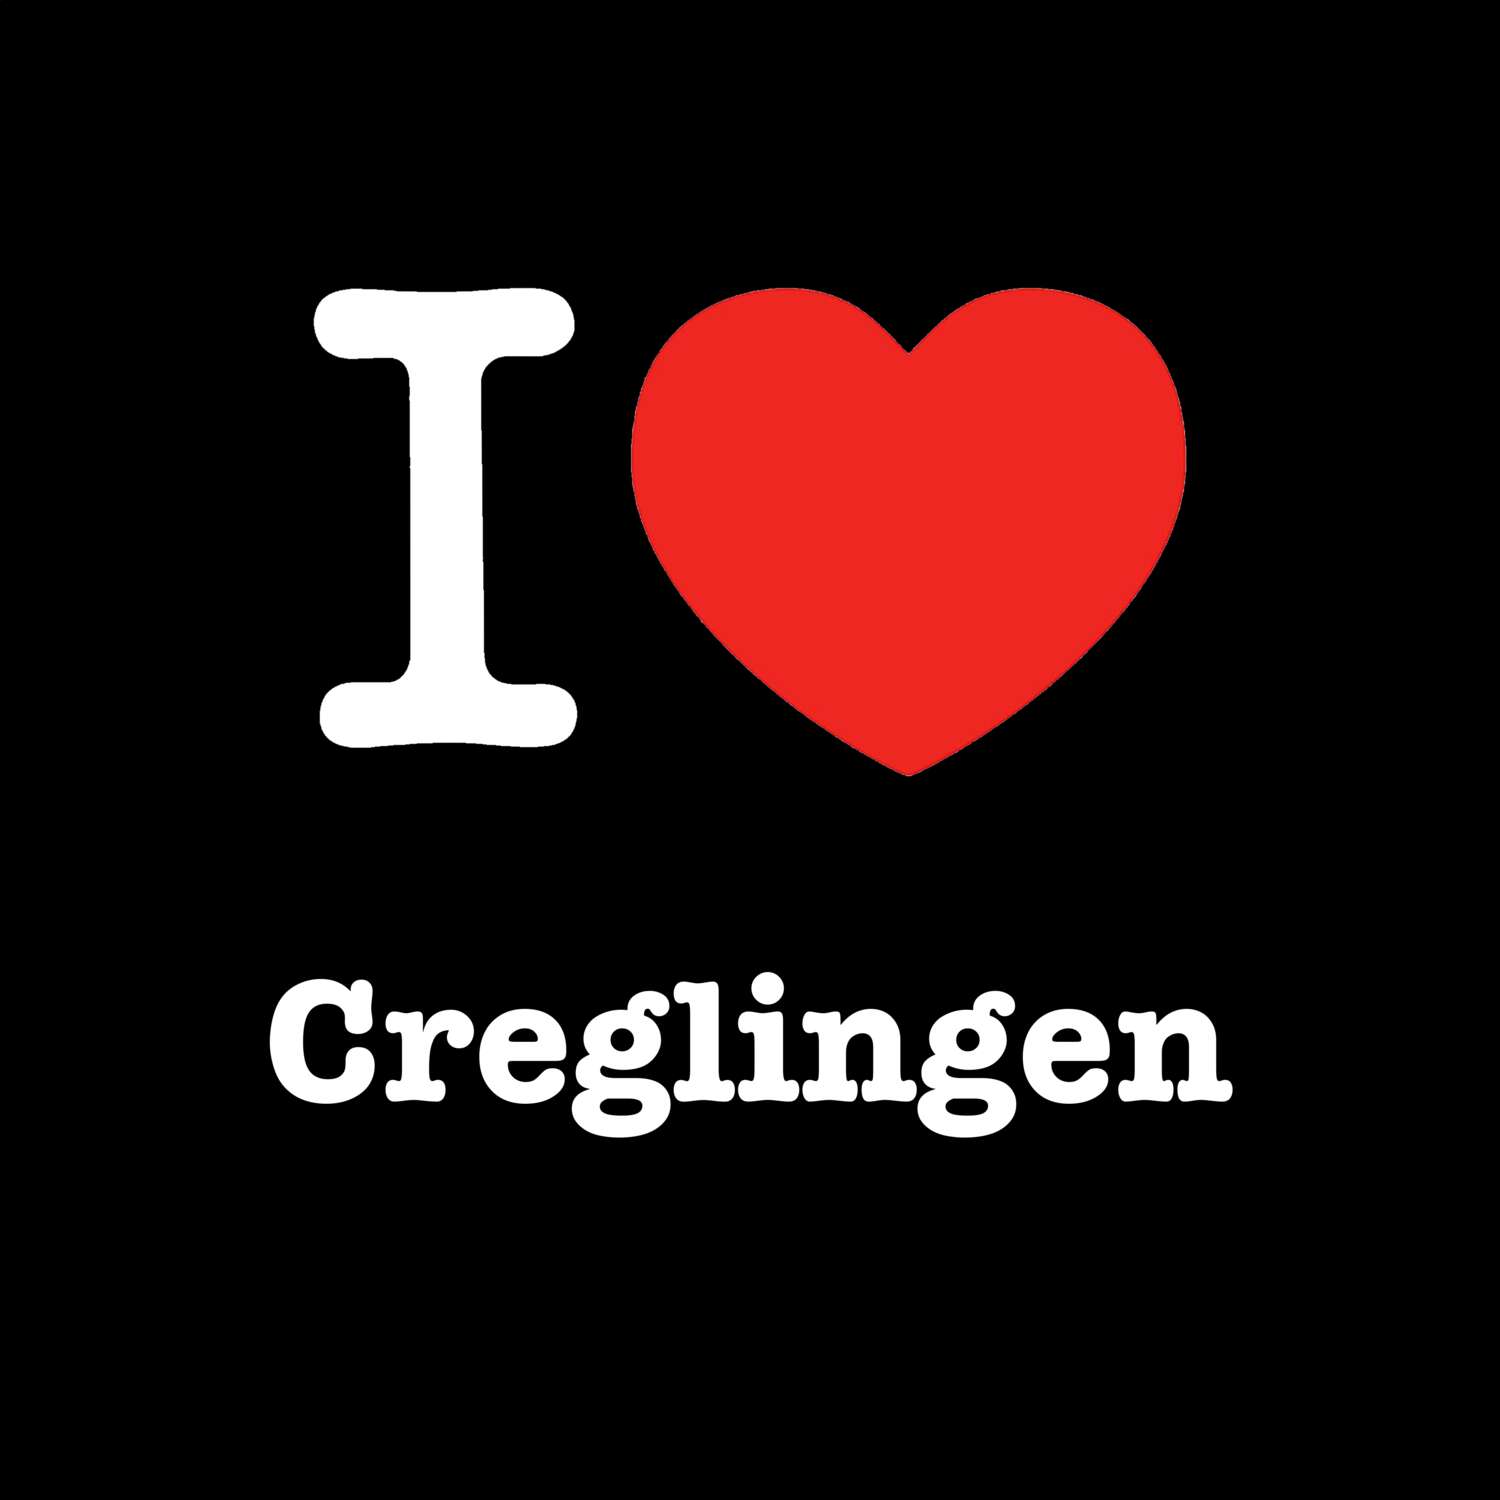 Creglingen T-Shirt »I love«